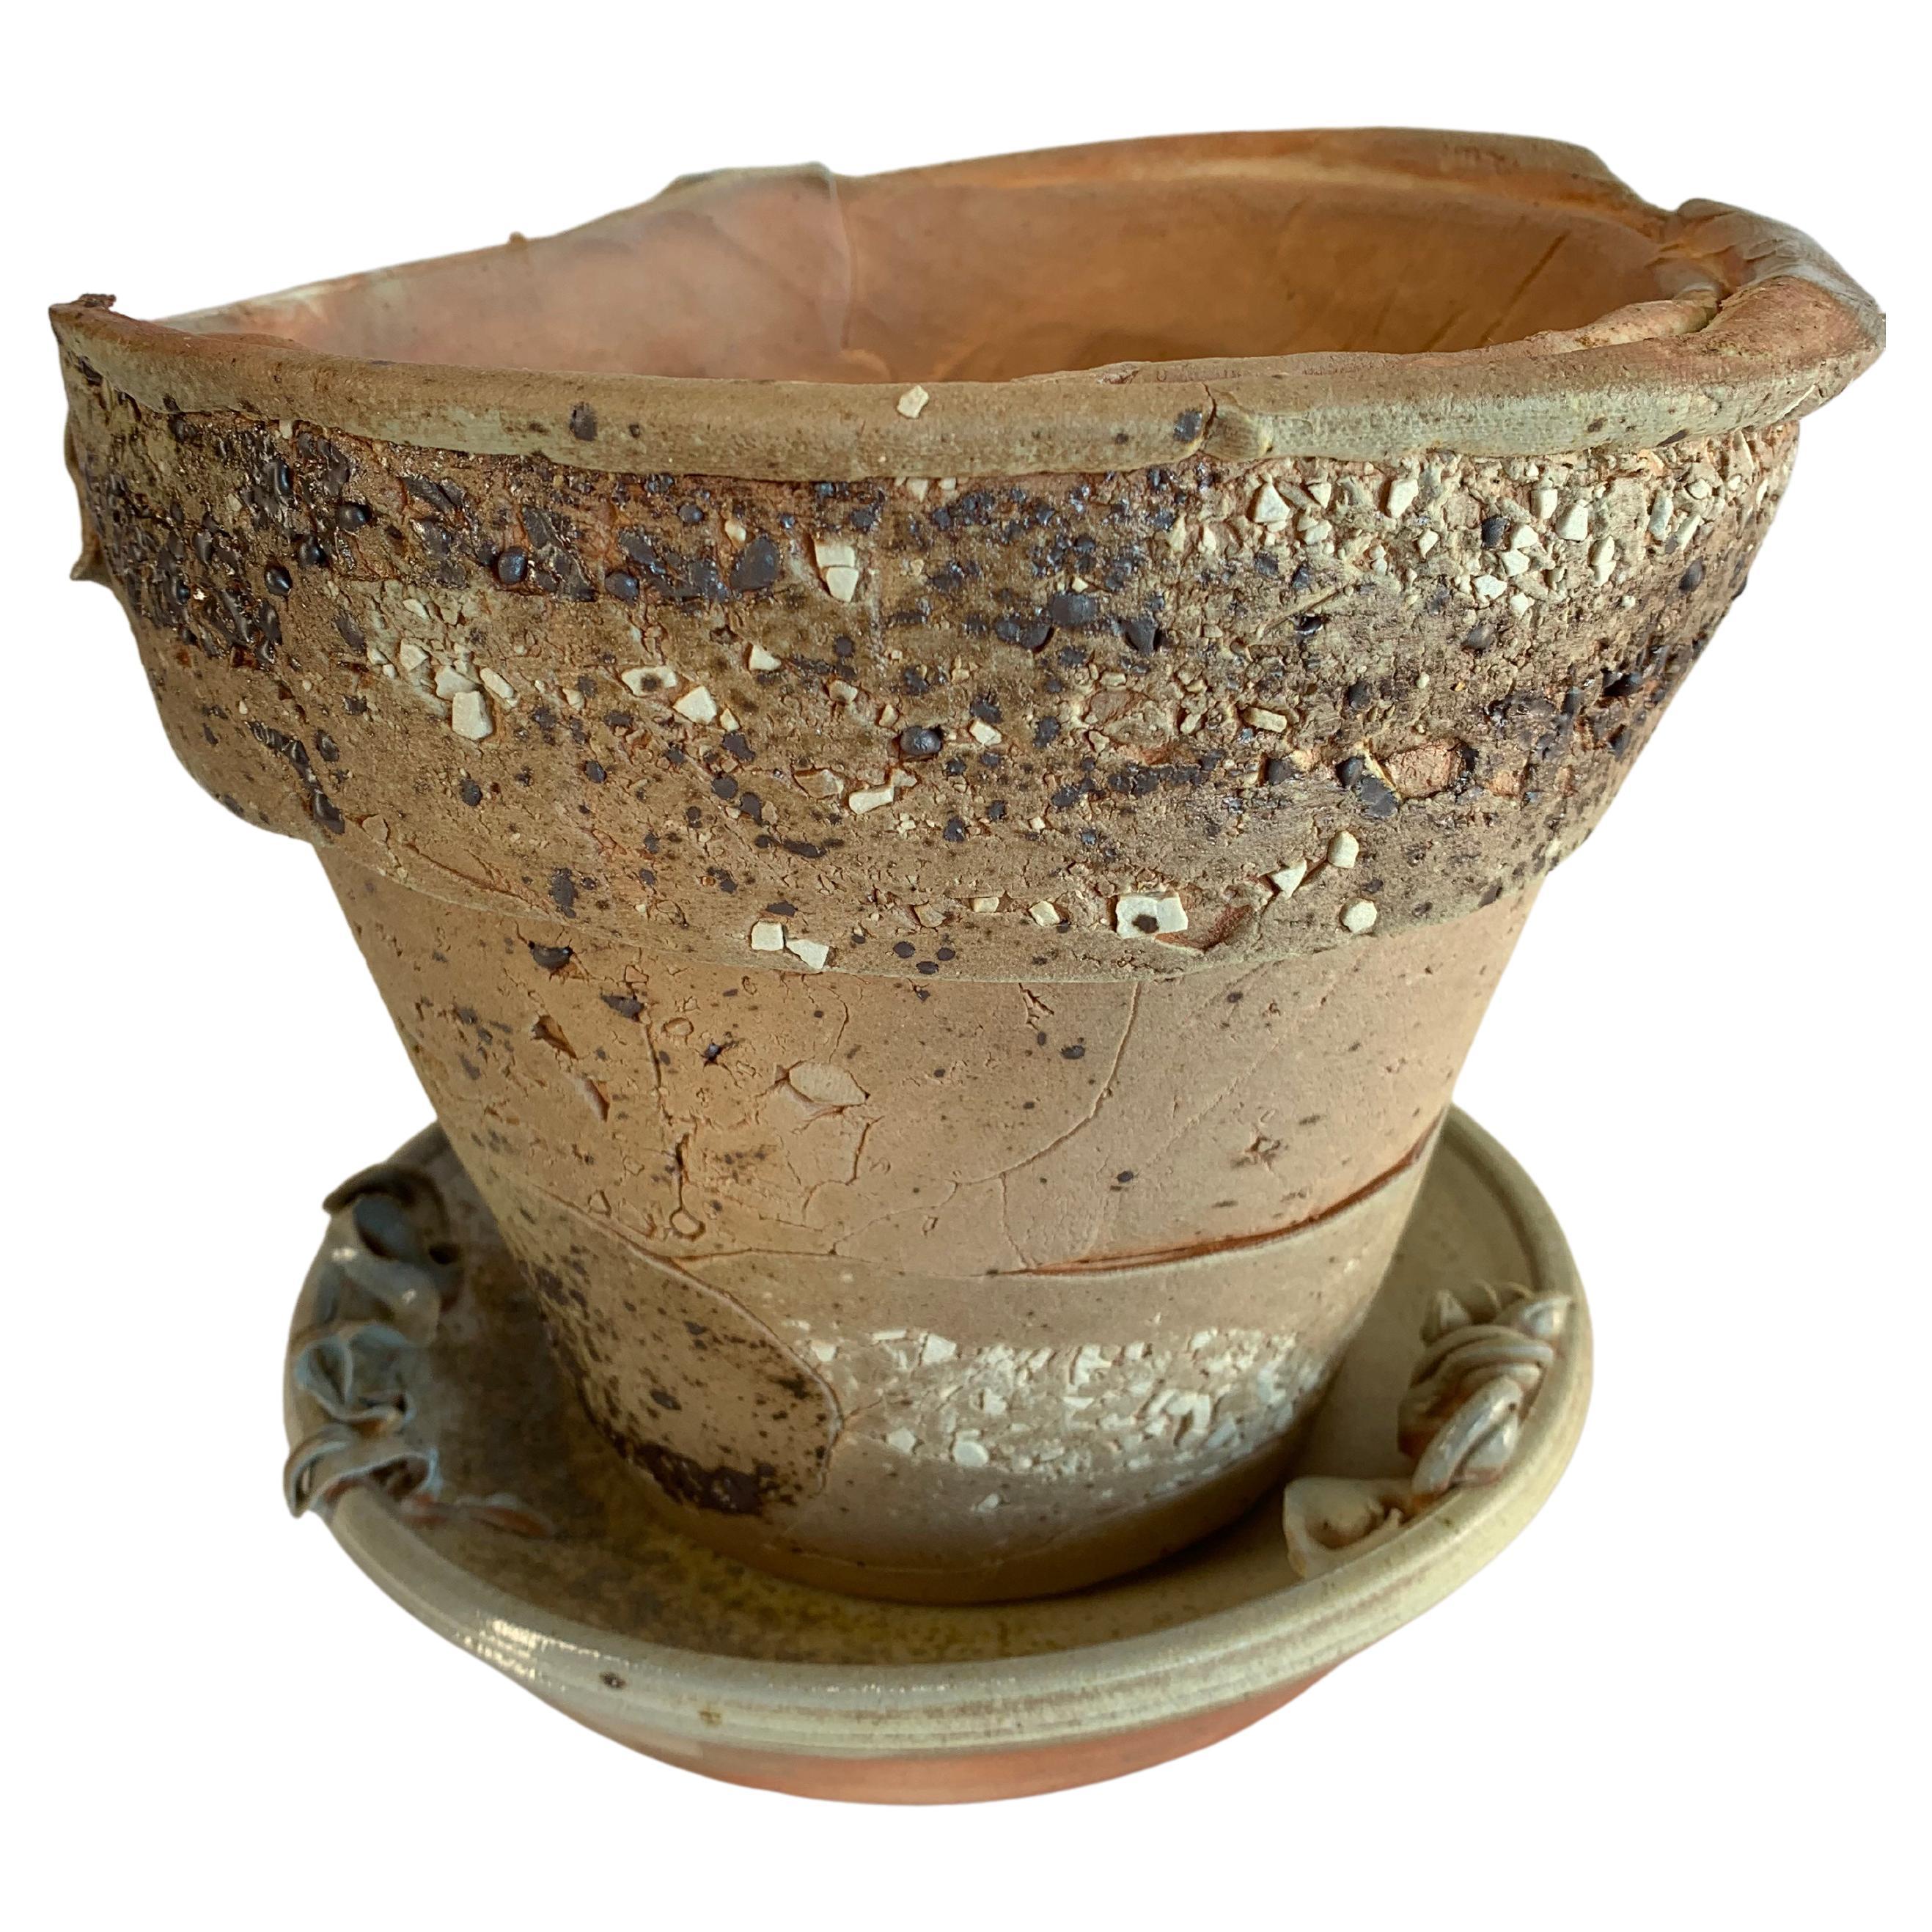 Ceramic Planter and Saucer For Sale